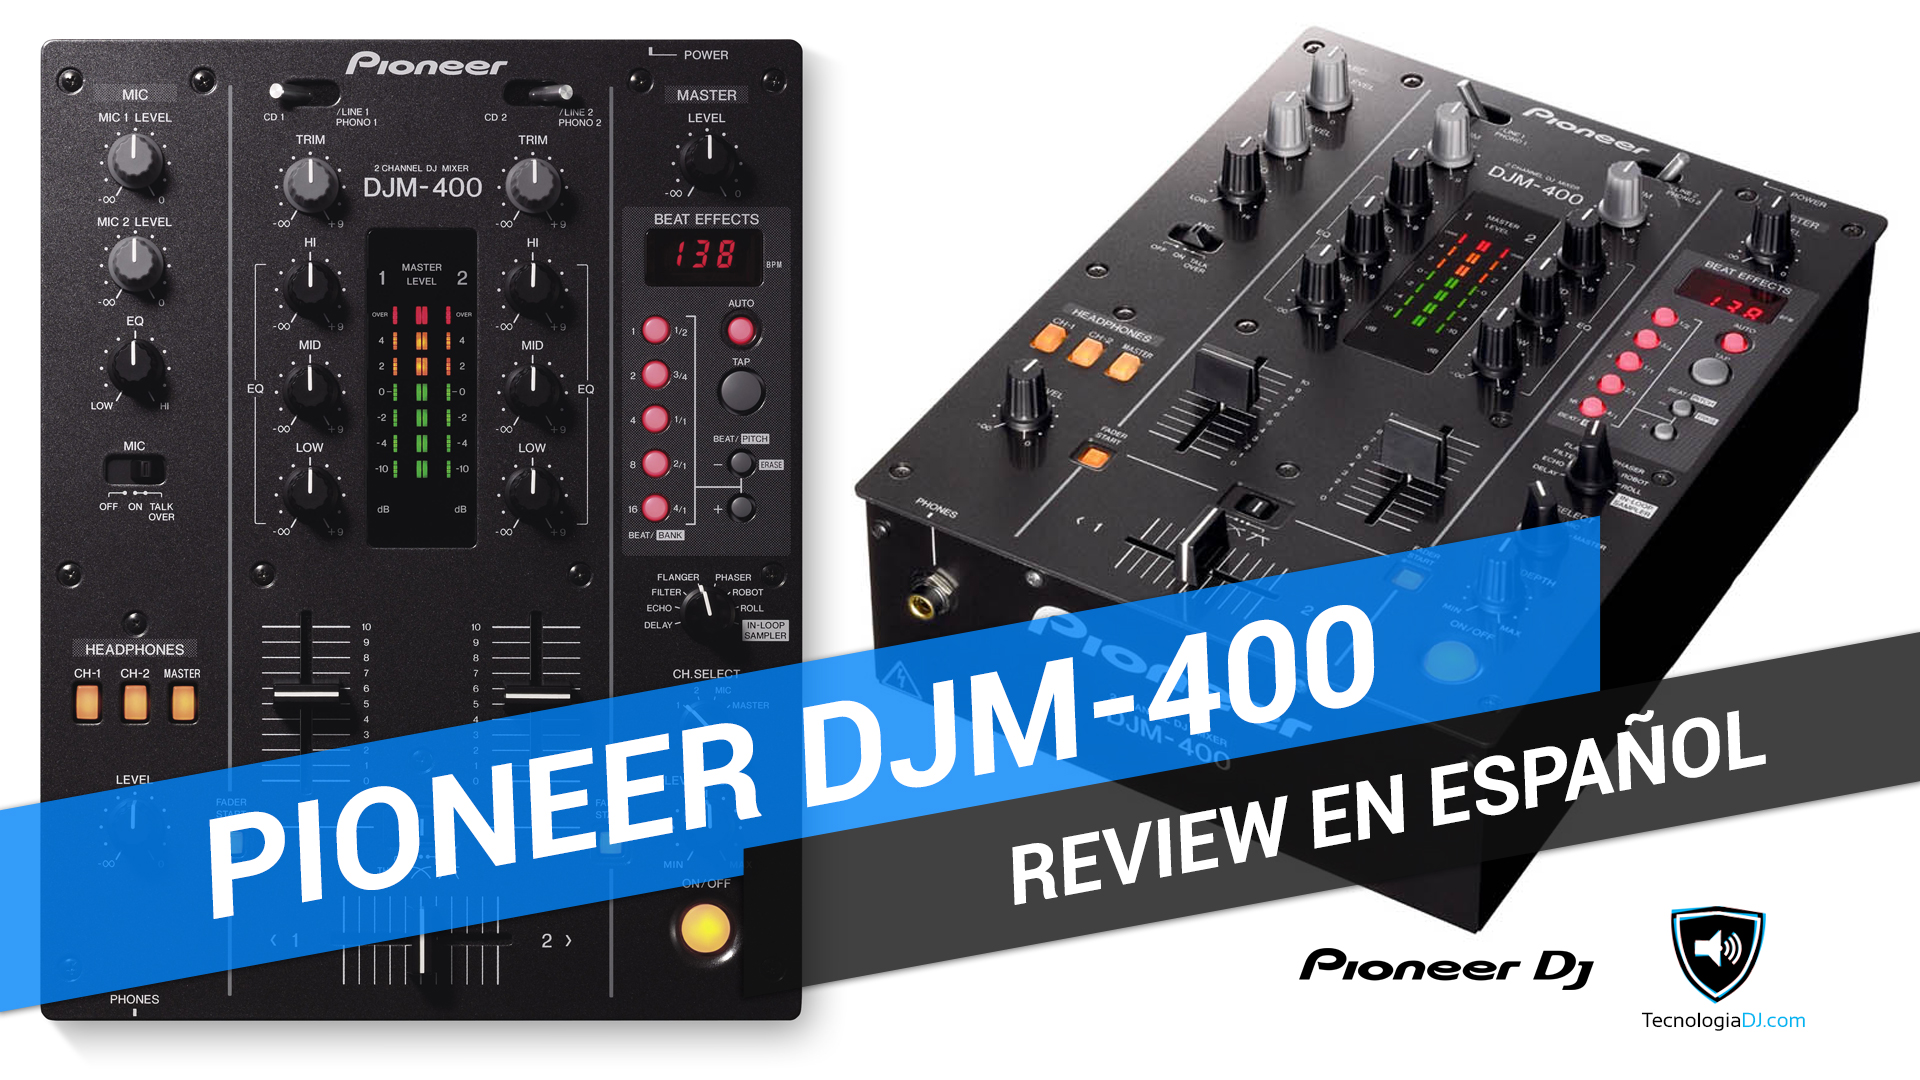 Review en español mixer Pioneer DJM-400